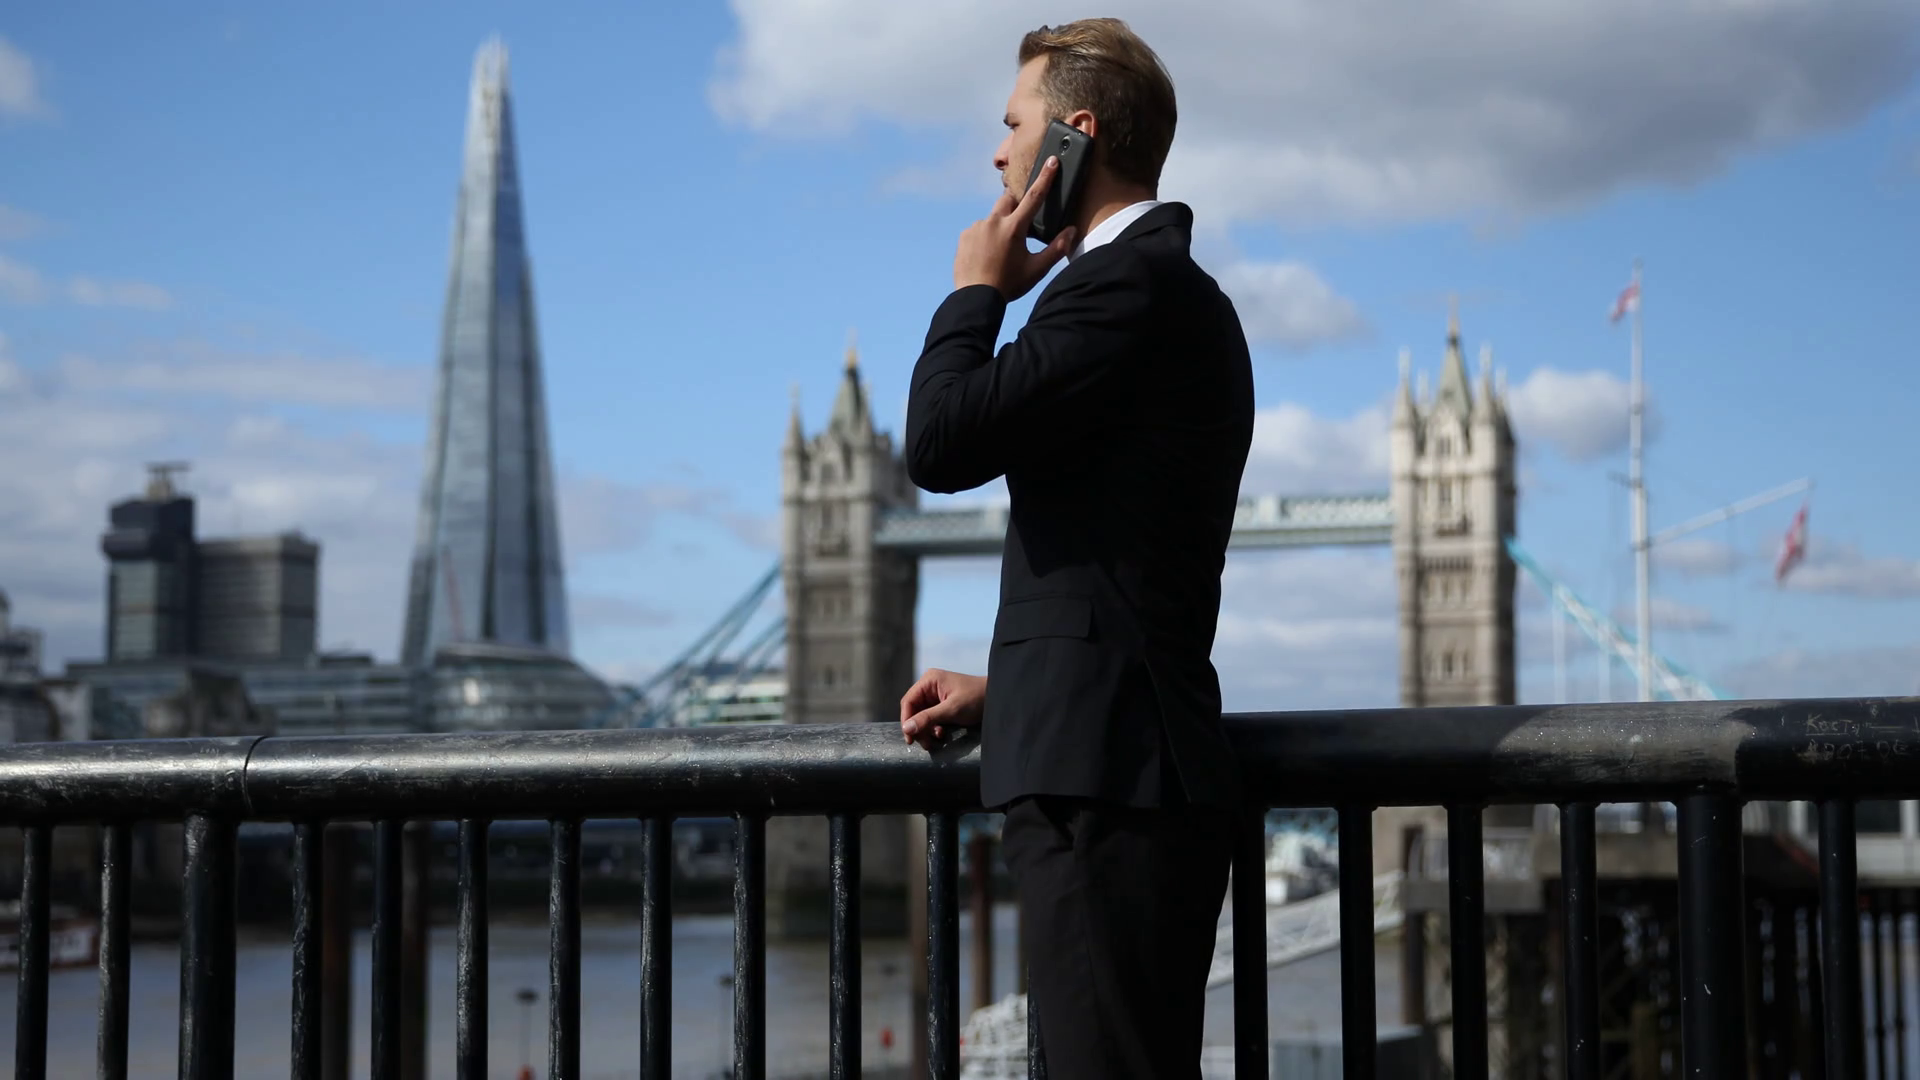 banker-businessman-talking-mobile-phone-partner-connection-london-skyline-tower_syb3dbi4l_thumbnail-full01